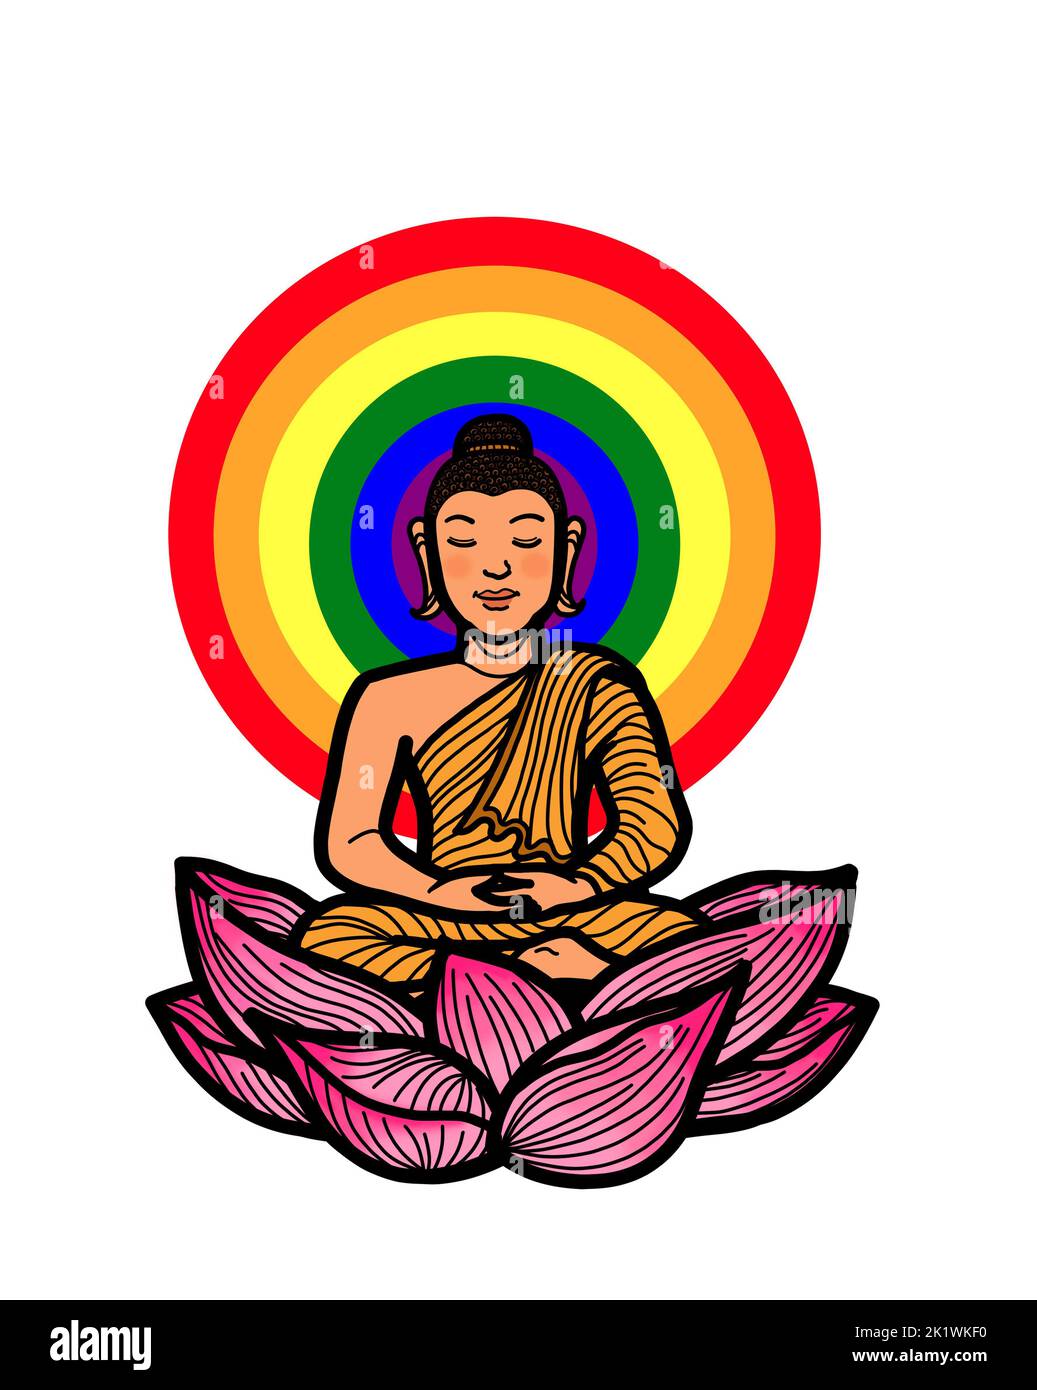 Gautama Buddha sitting in lotus pose meditating with gay rainbow aura. Buddhist meditation practice for enlightment, mindfulness, peace, harmony and s Stock Photo